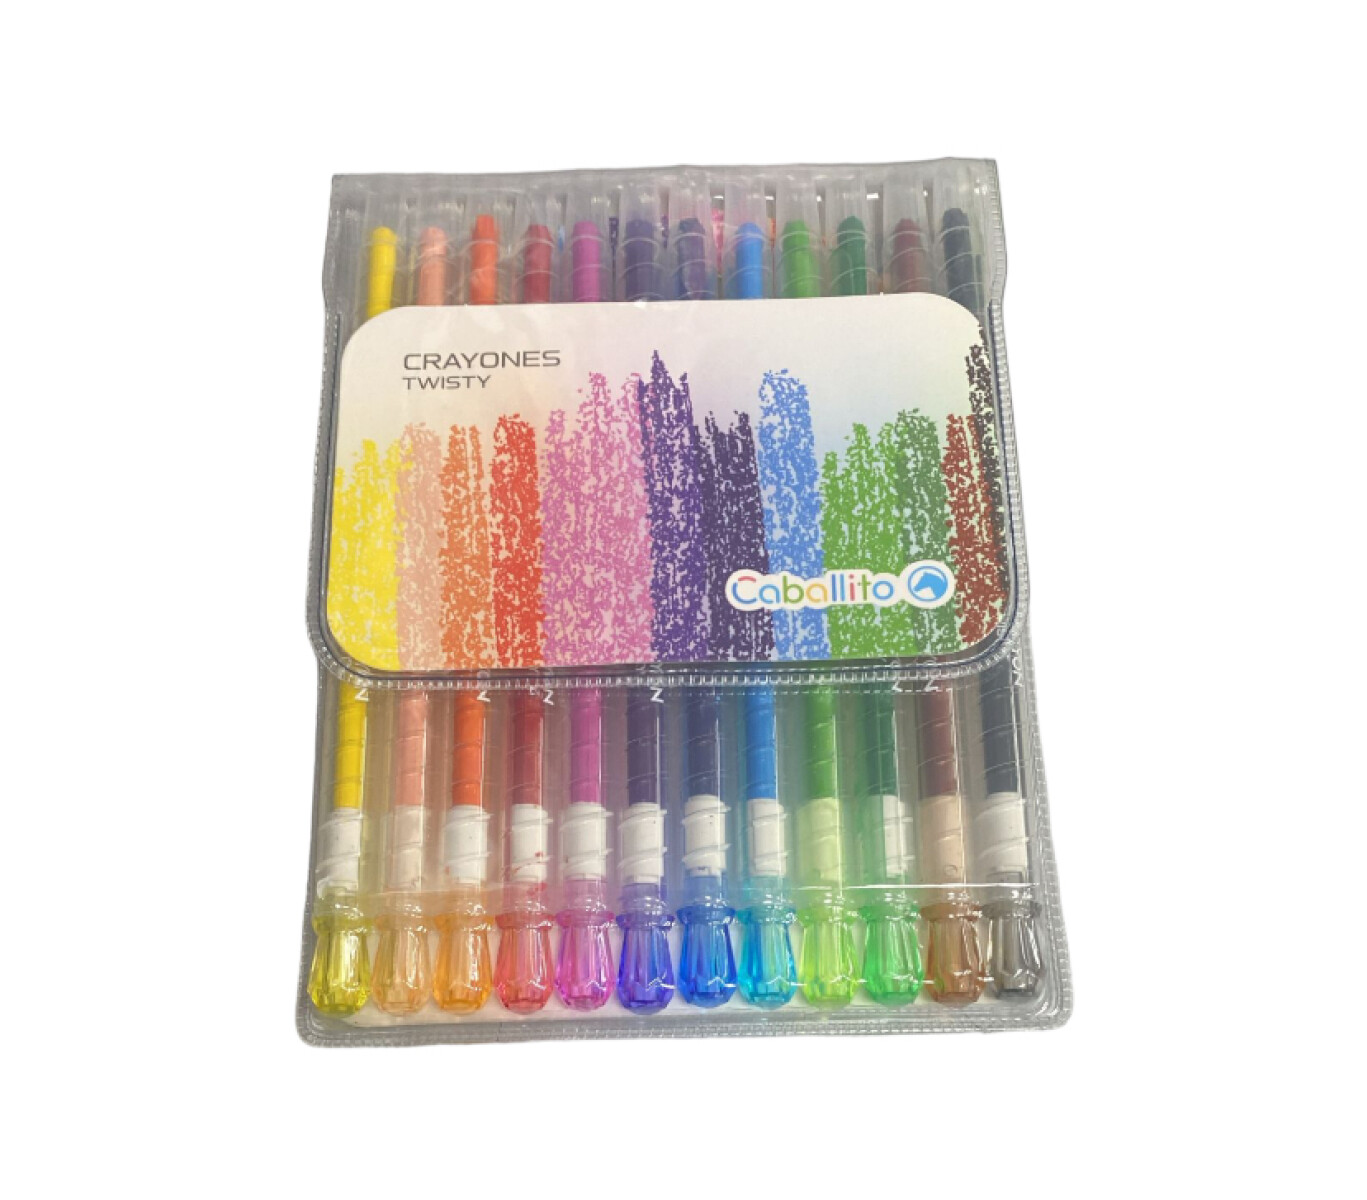 Crayones Caballito Twist Pack x12 